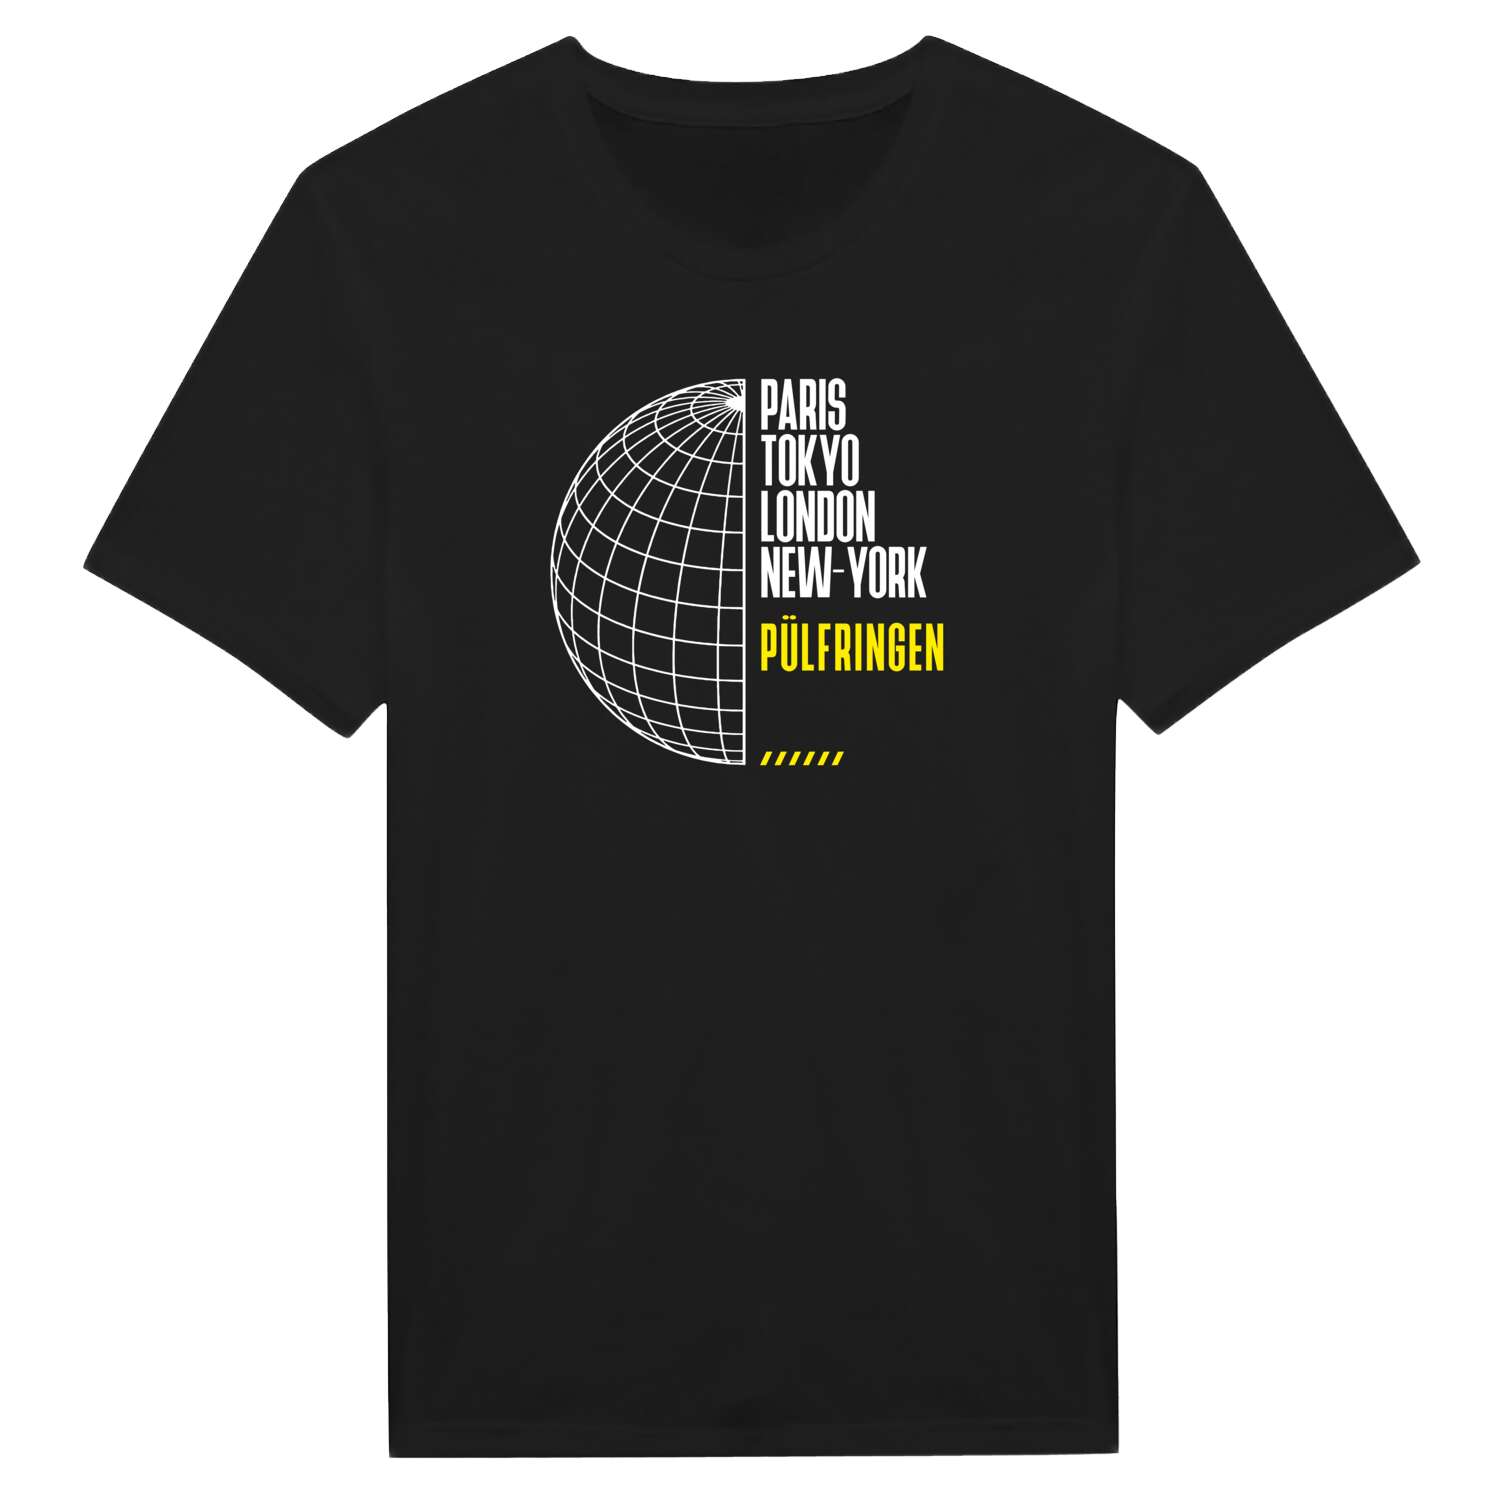 Pülfringen T-Shirt »Paris Tokyo London«